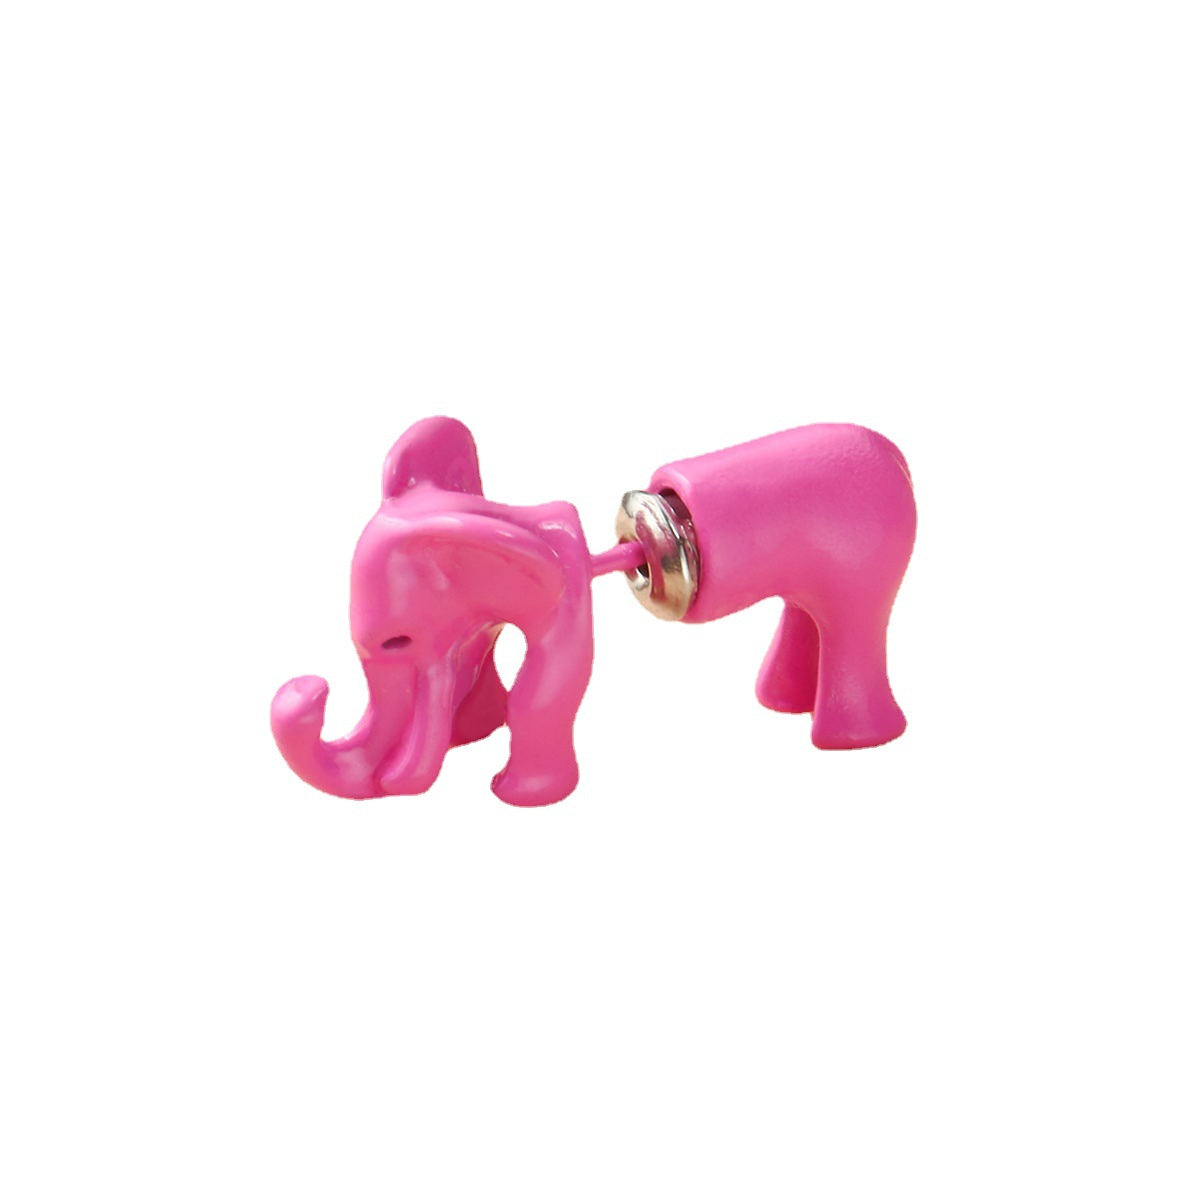 A Dark Wind Alloy Elephant Earrings from Maramalive™.